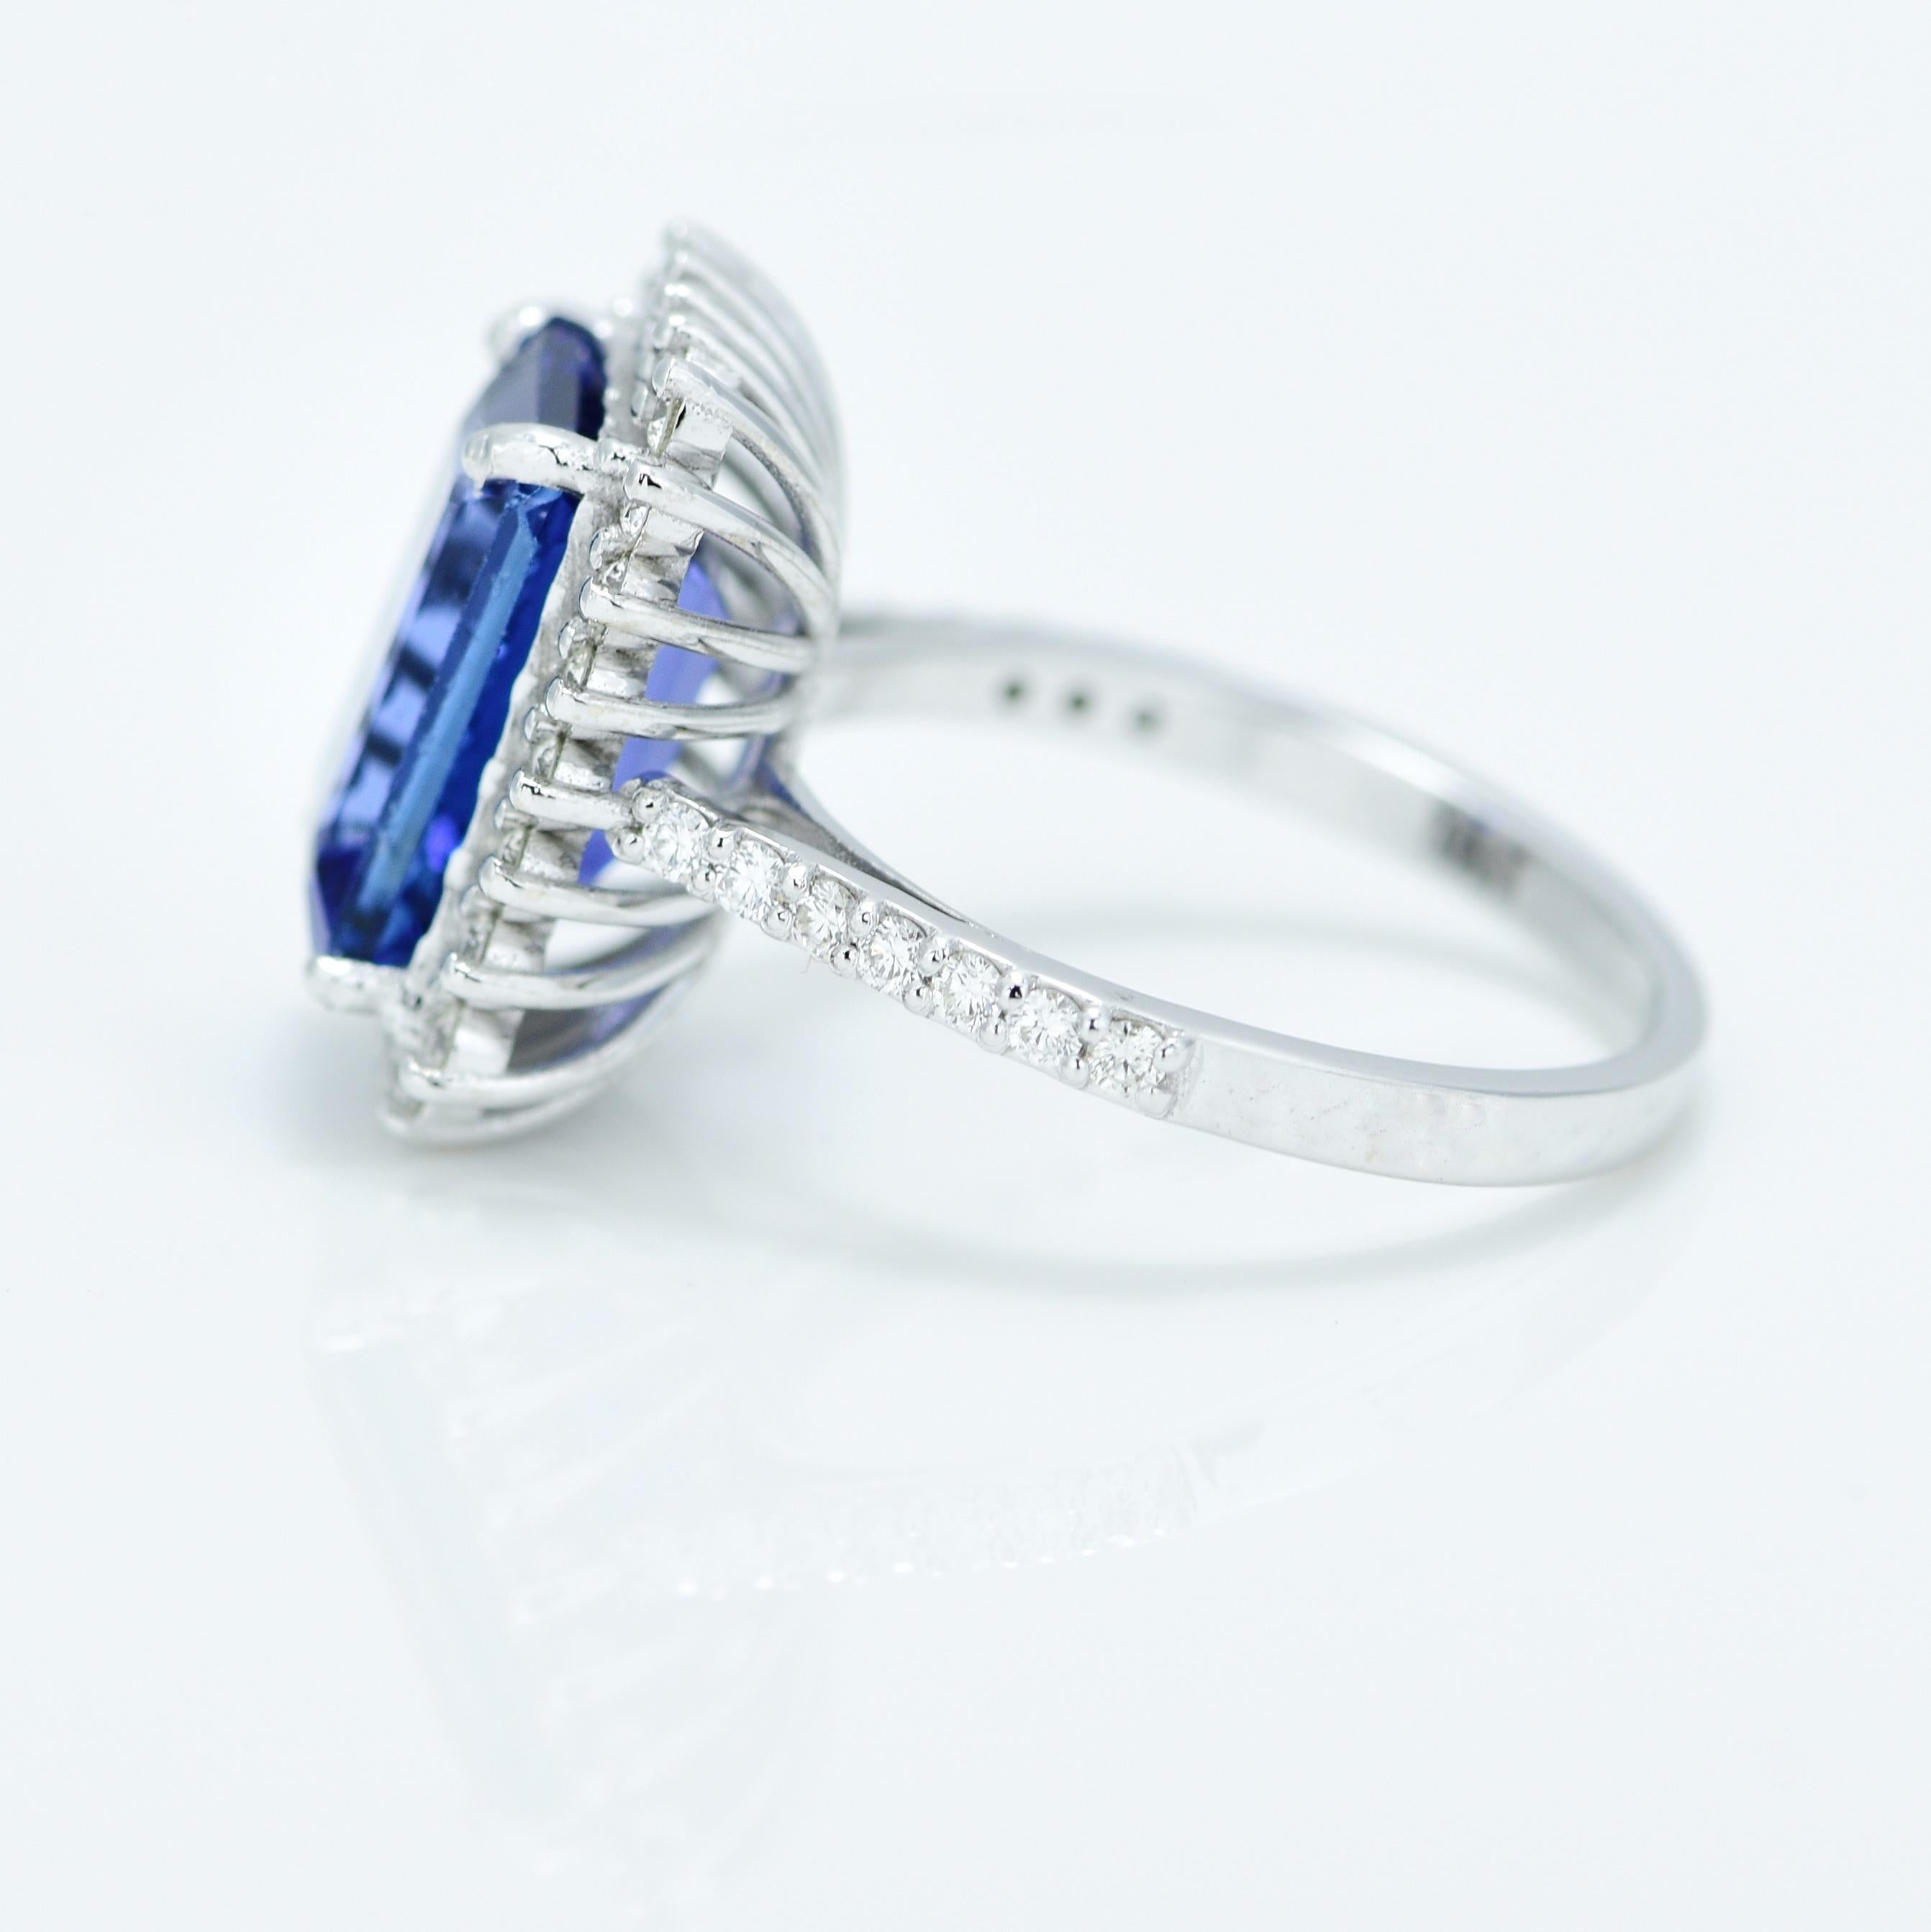 Stunning Violetish Blue Tanzanite and Diamond halo ring.

Centre Stone - Natural Tanzanite, 
Centre Stone Weight - 5.19 Carat, 
Centre Stone Shape & Cut - Emerald Step Cut
 
Total Number of Diamonds - 38, 
Diamonds Carat Weight - 0.56 carat
Diamond